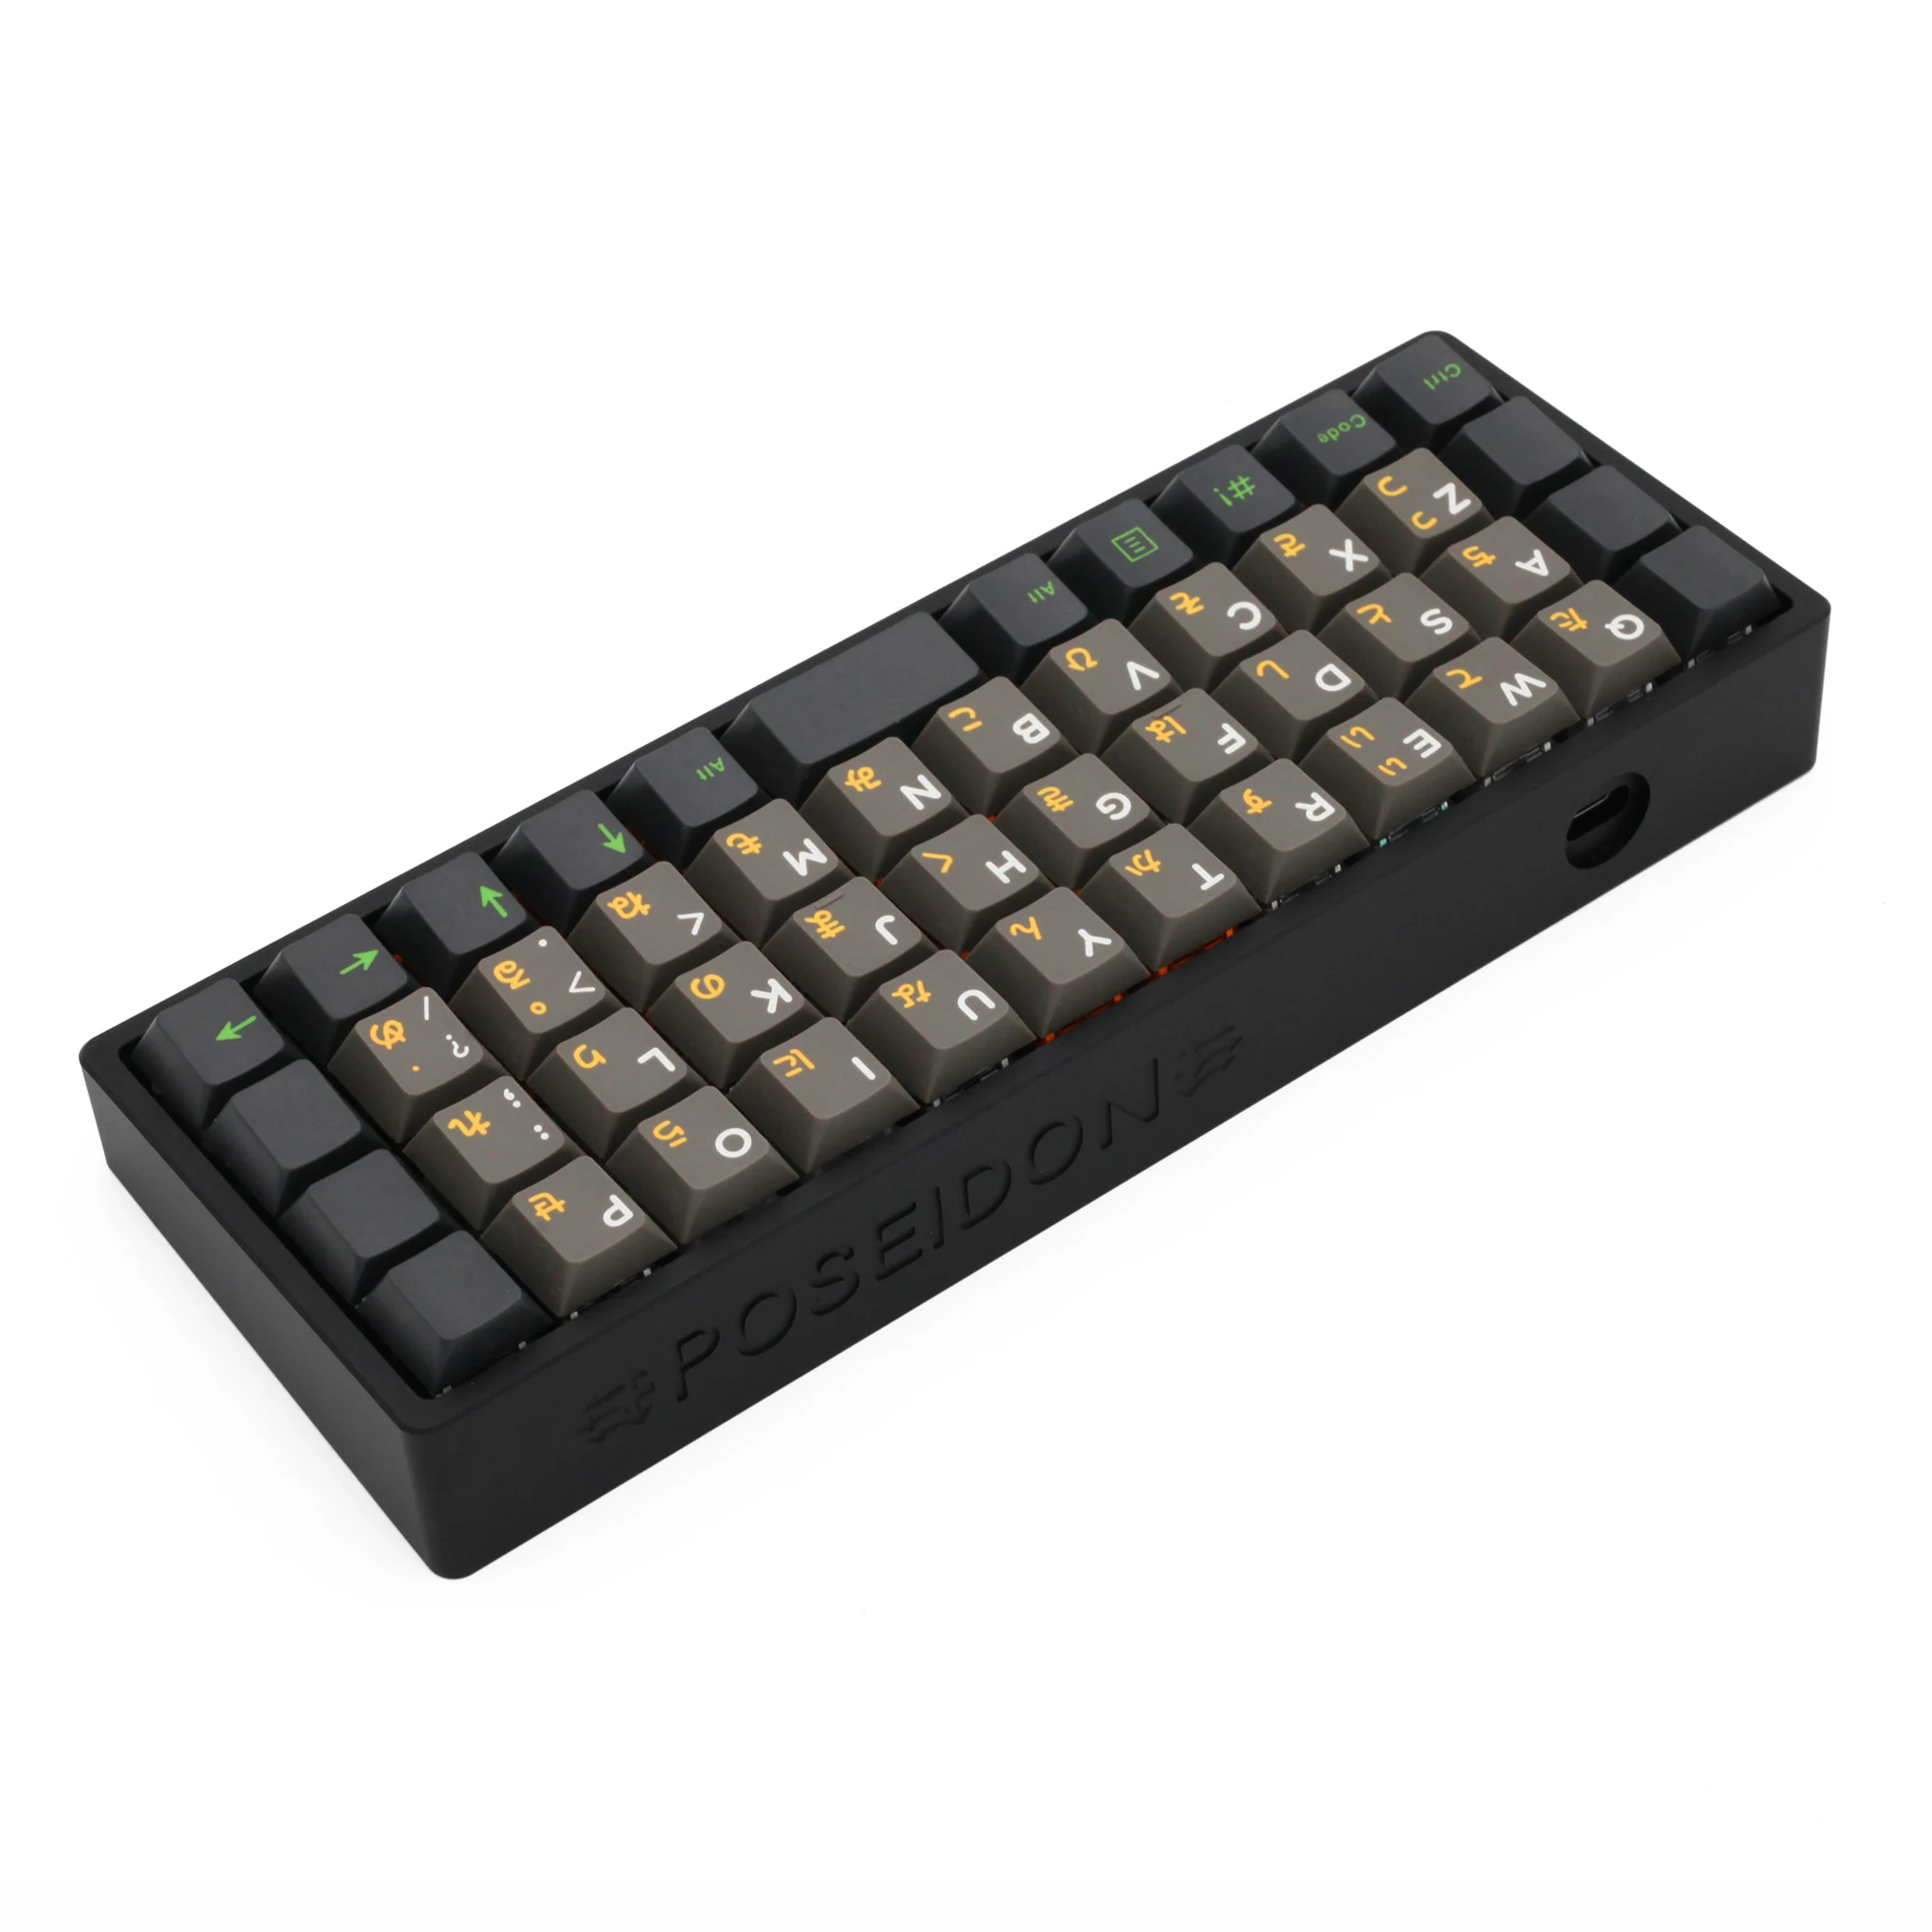 Poseidon-Funda de aluminio anodizado para teclado mecánico personalizado, carcasa para PSD40, color negro, gris, azul y rojo, para JJ40, BM40, BM40, RGB